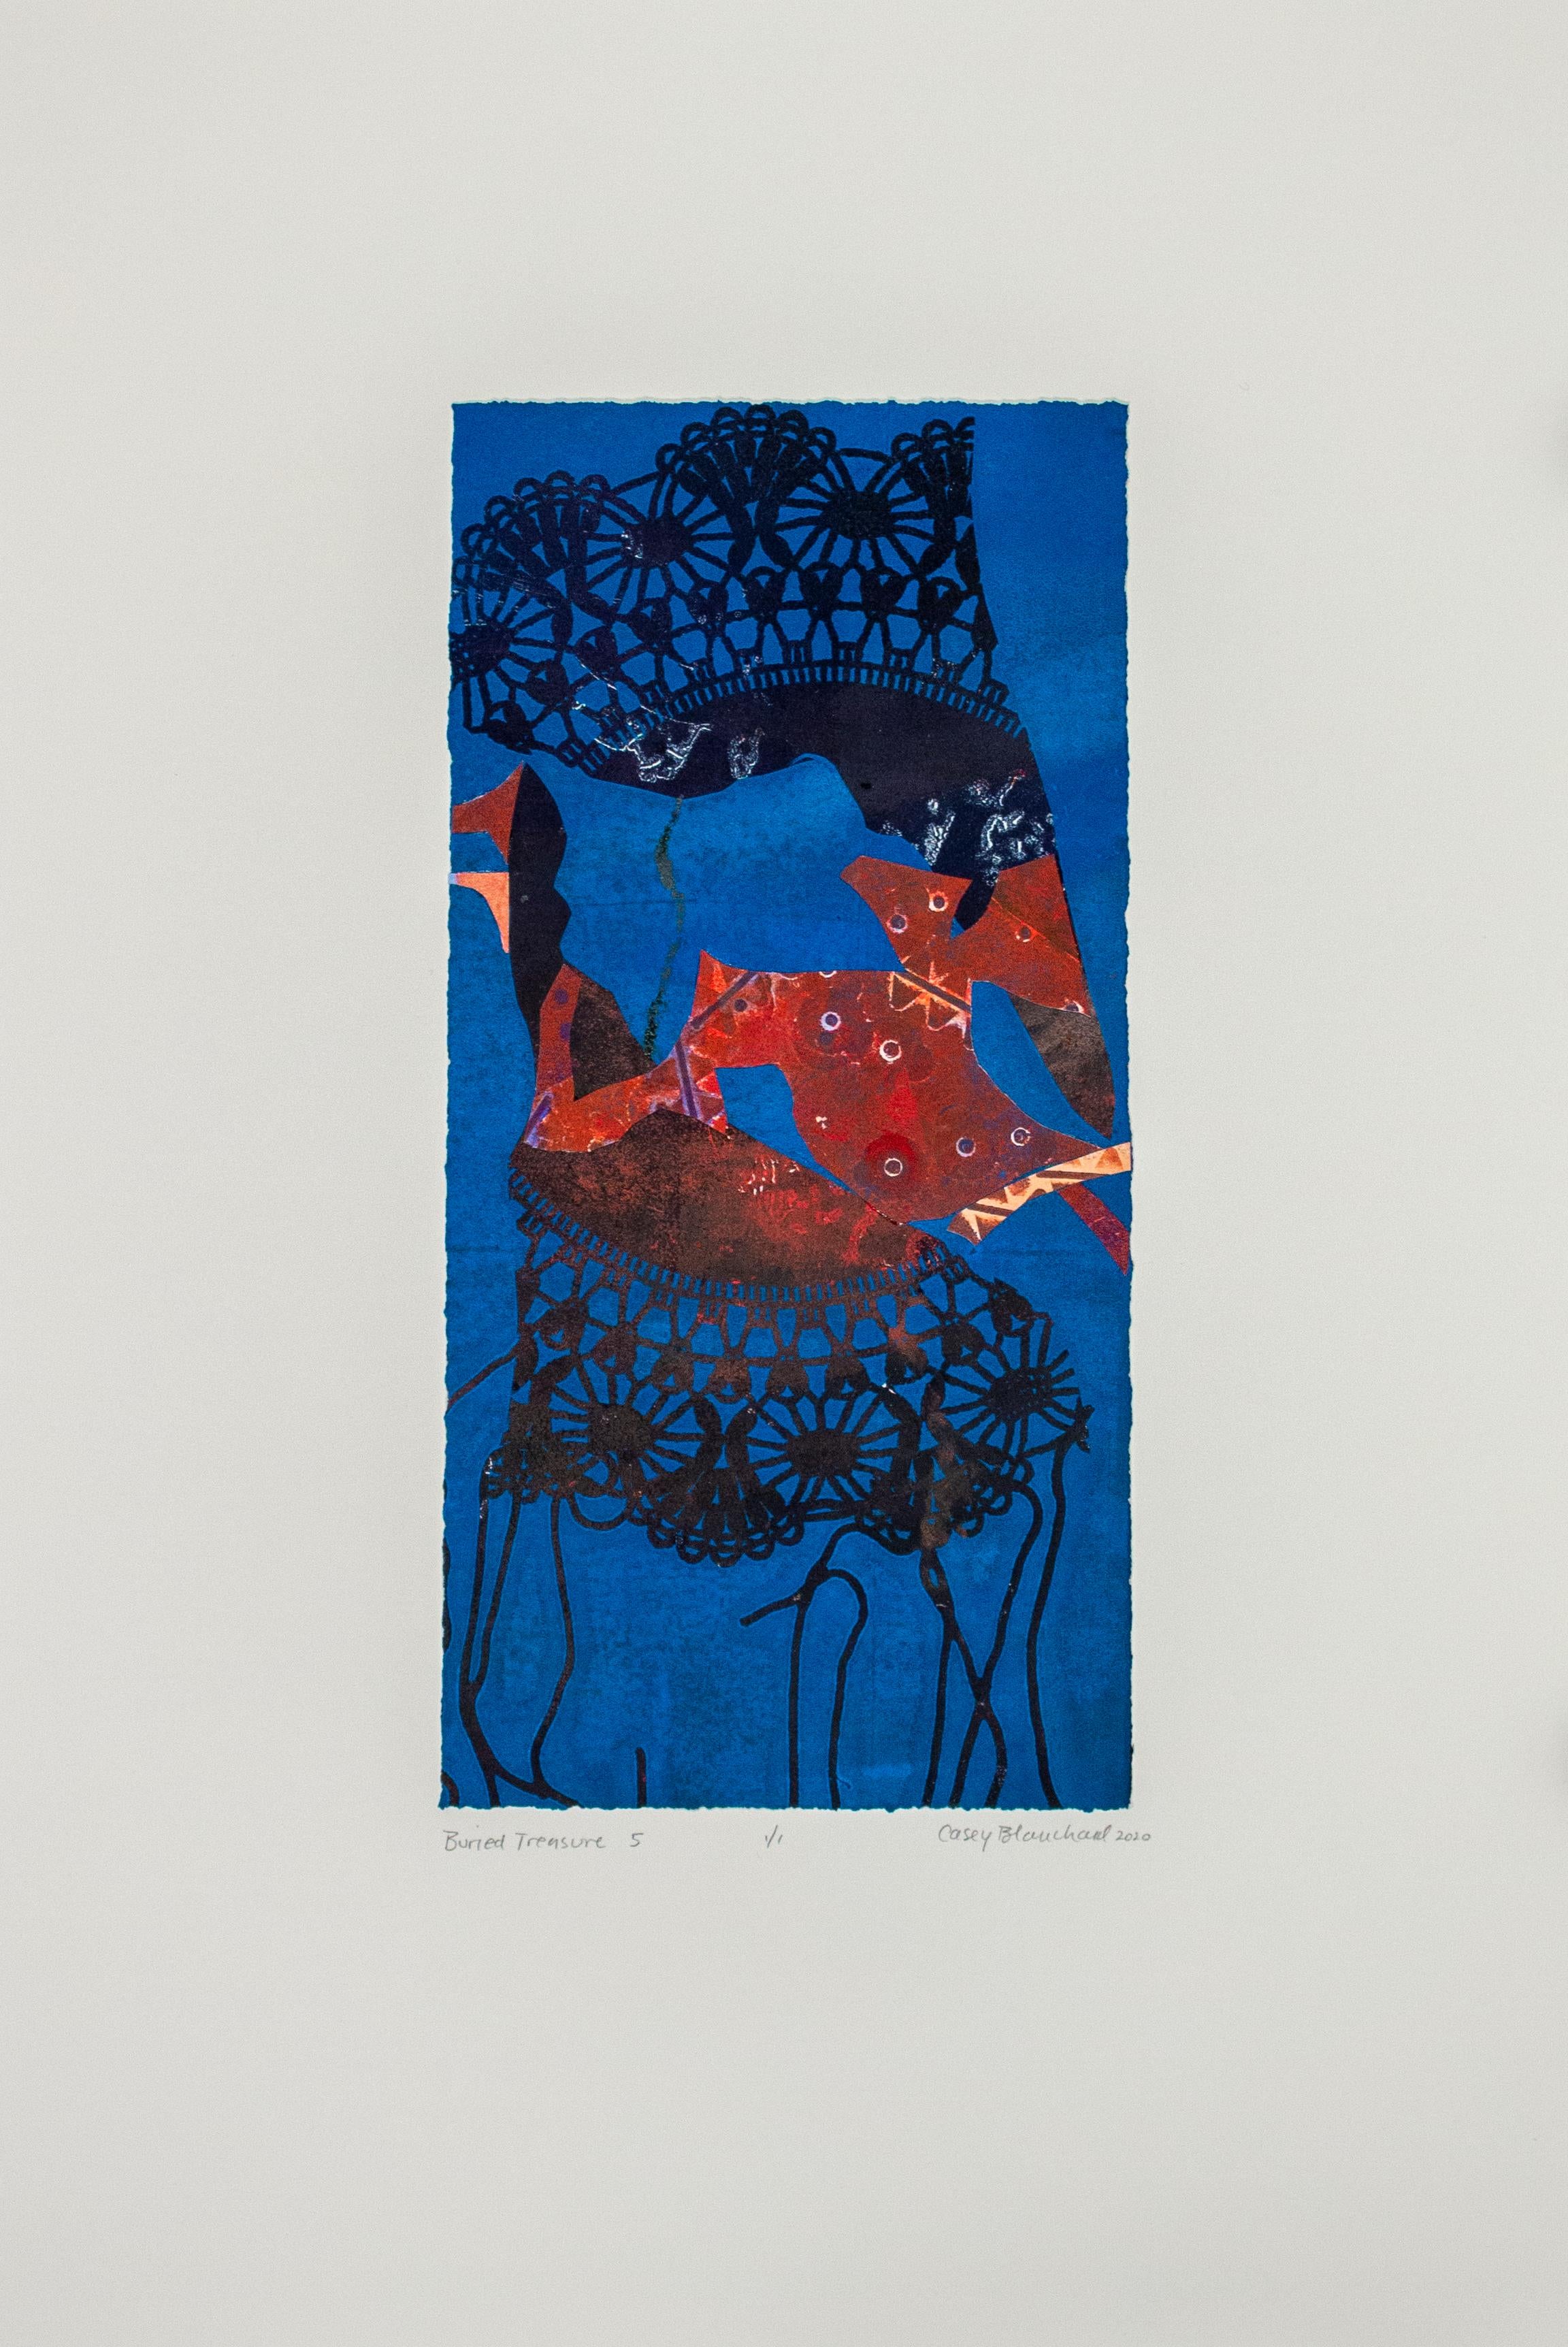 Casey Blanchard Abstract Print - Buried Treasure 5